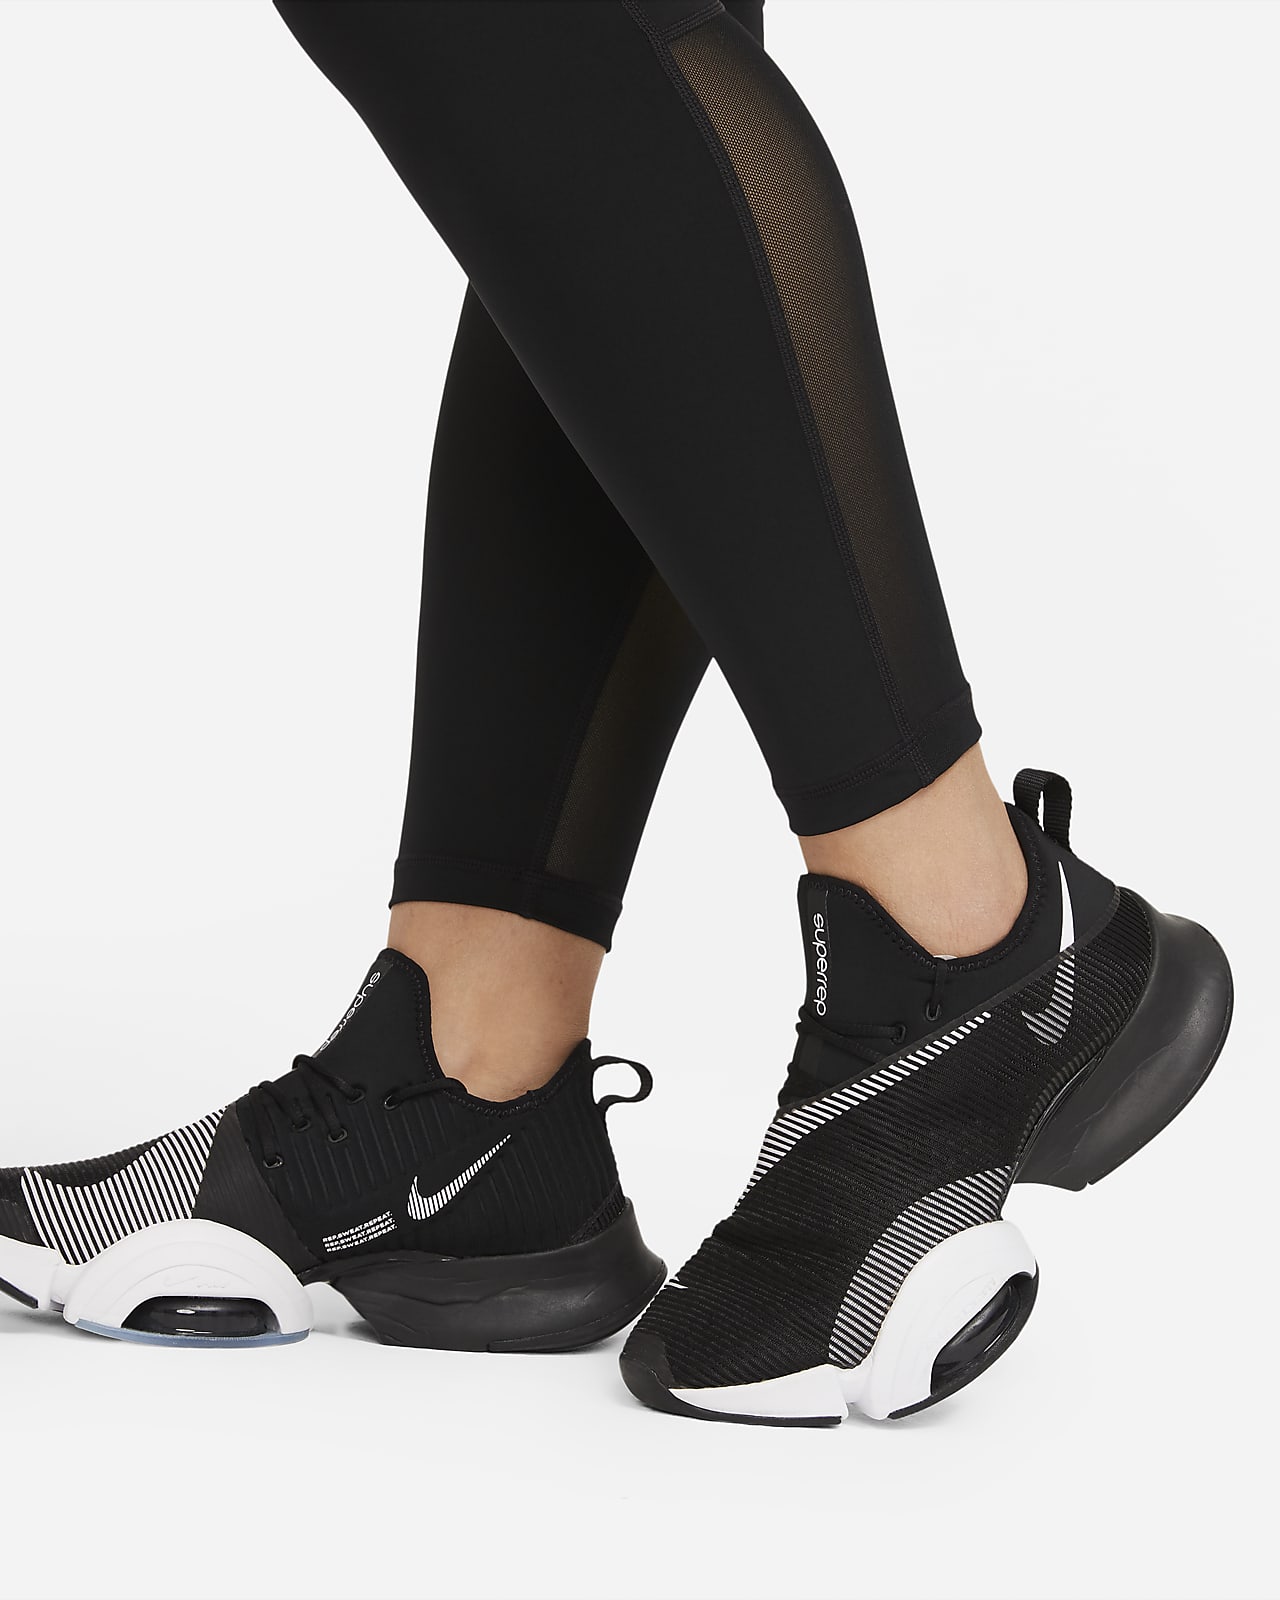 NWT Nike Women's Pro 365 Plus Size 2X Cropped Leggings DRI-Fit Heather Grey  $45